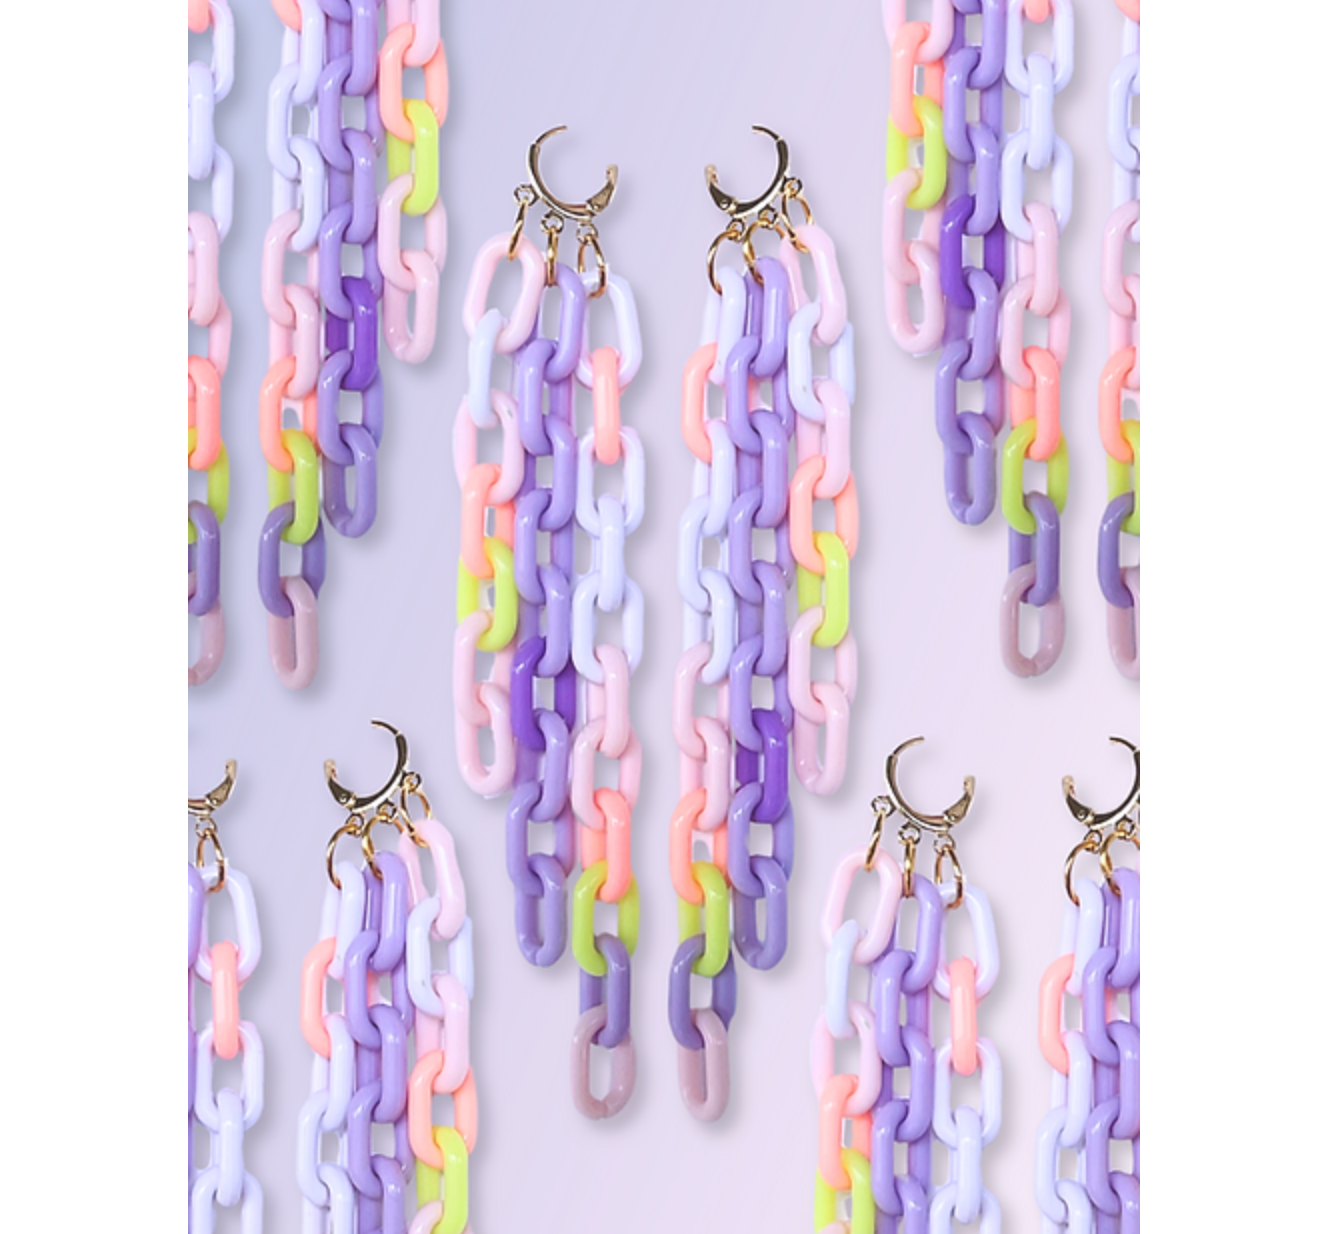 Colorful Link Fringe Earrings